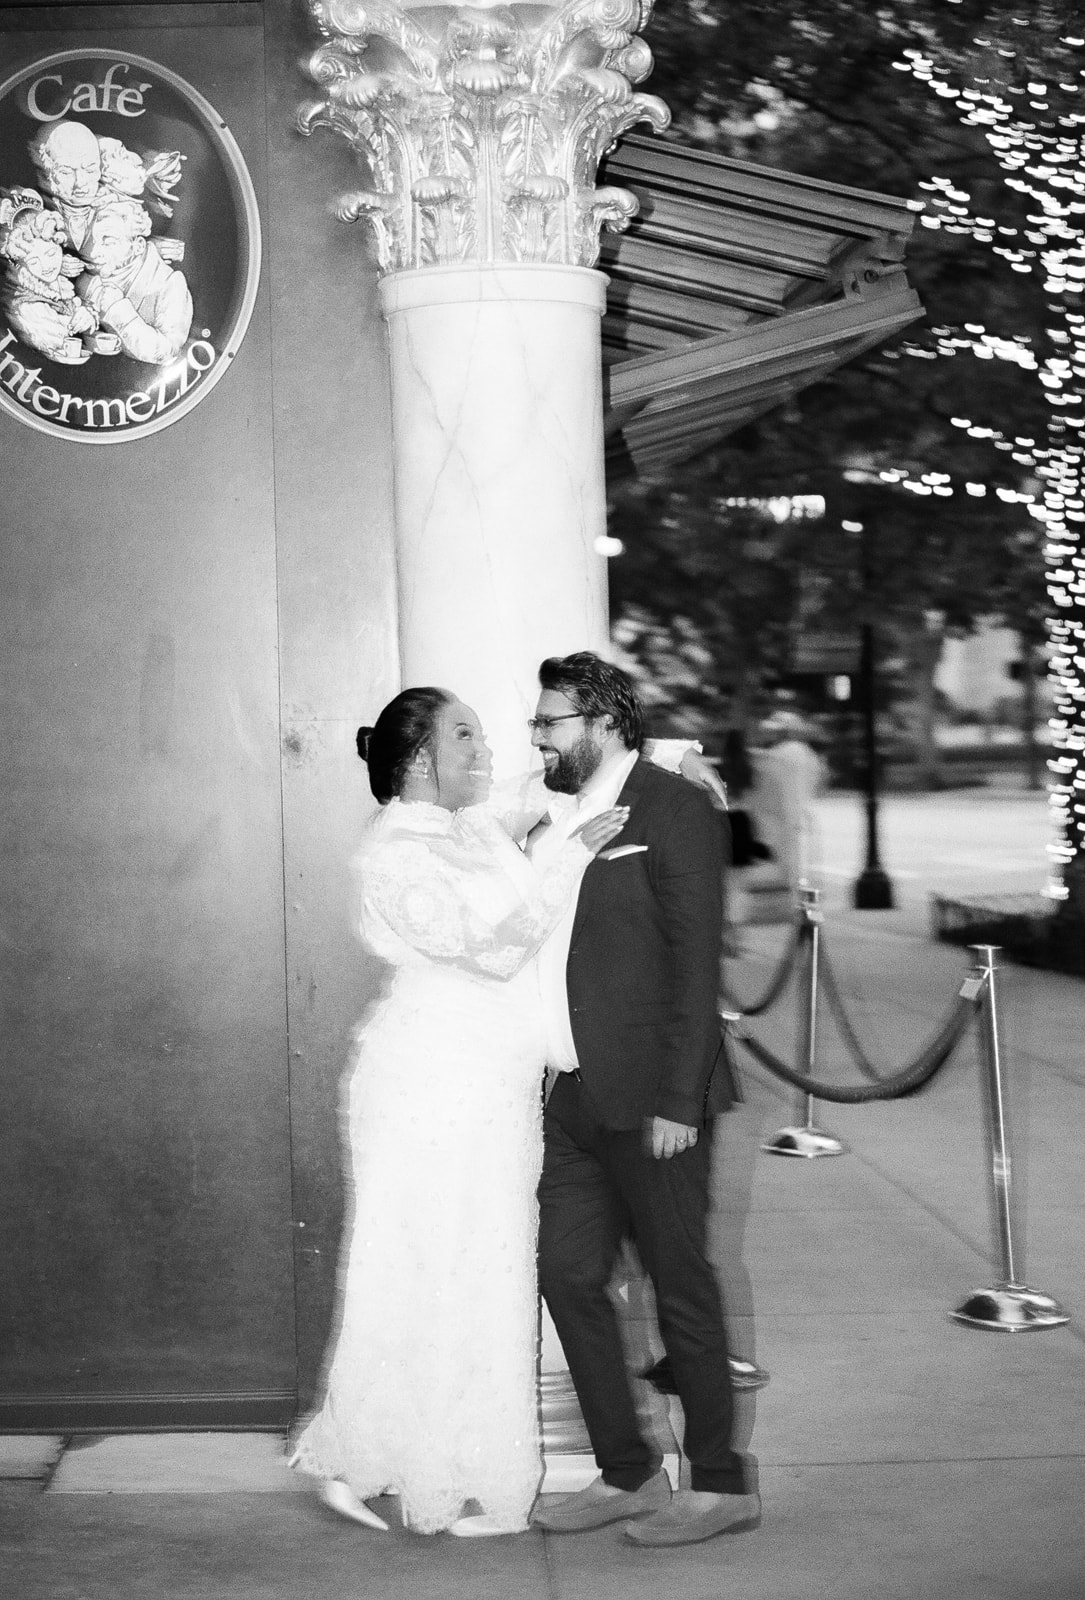 Atlanta Cafe Intermezzo film wedding photos